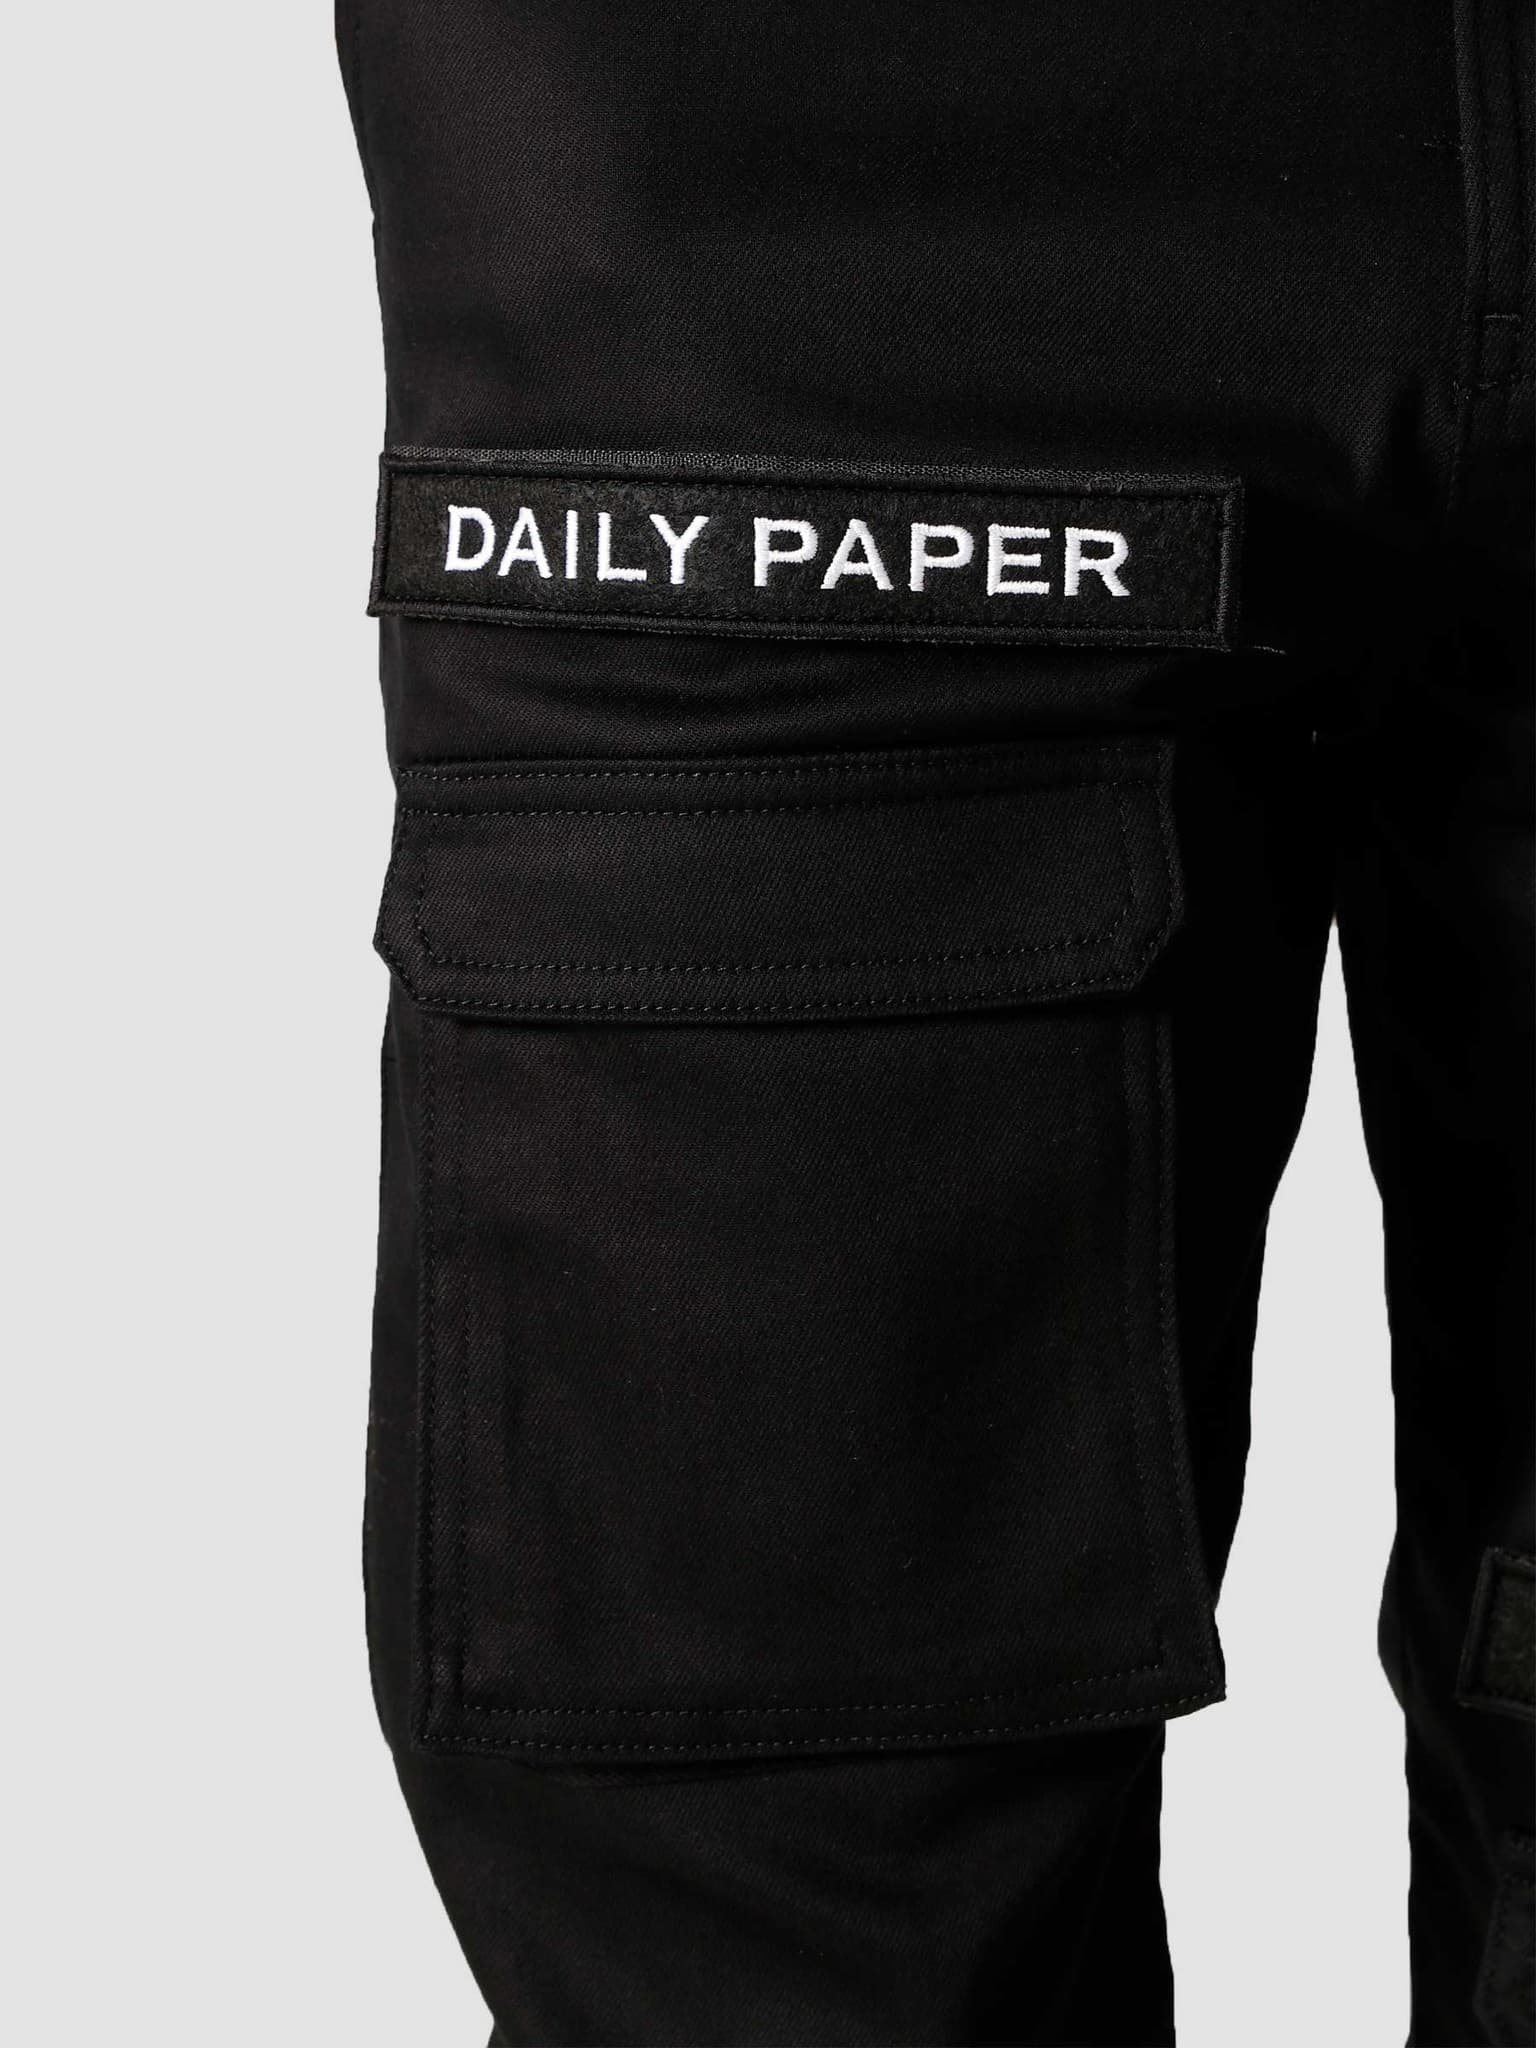 Daily Paper Cargo Pants Black - Freshcotton